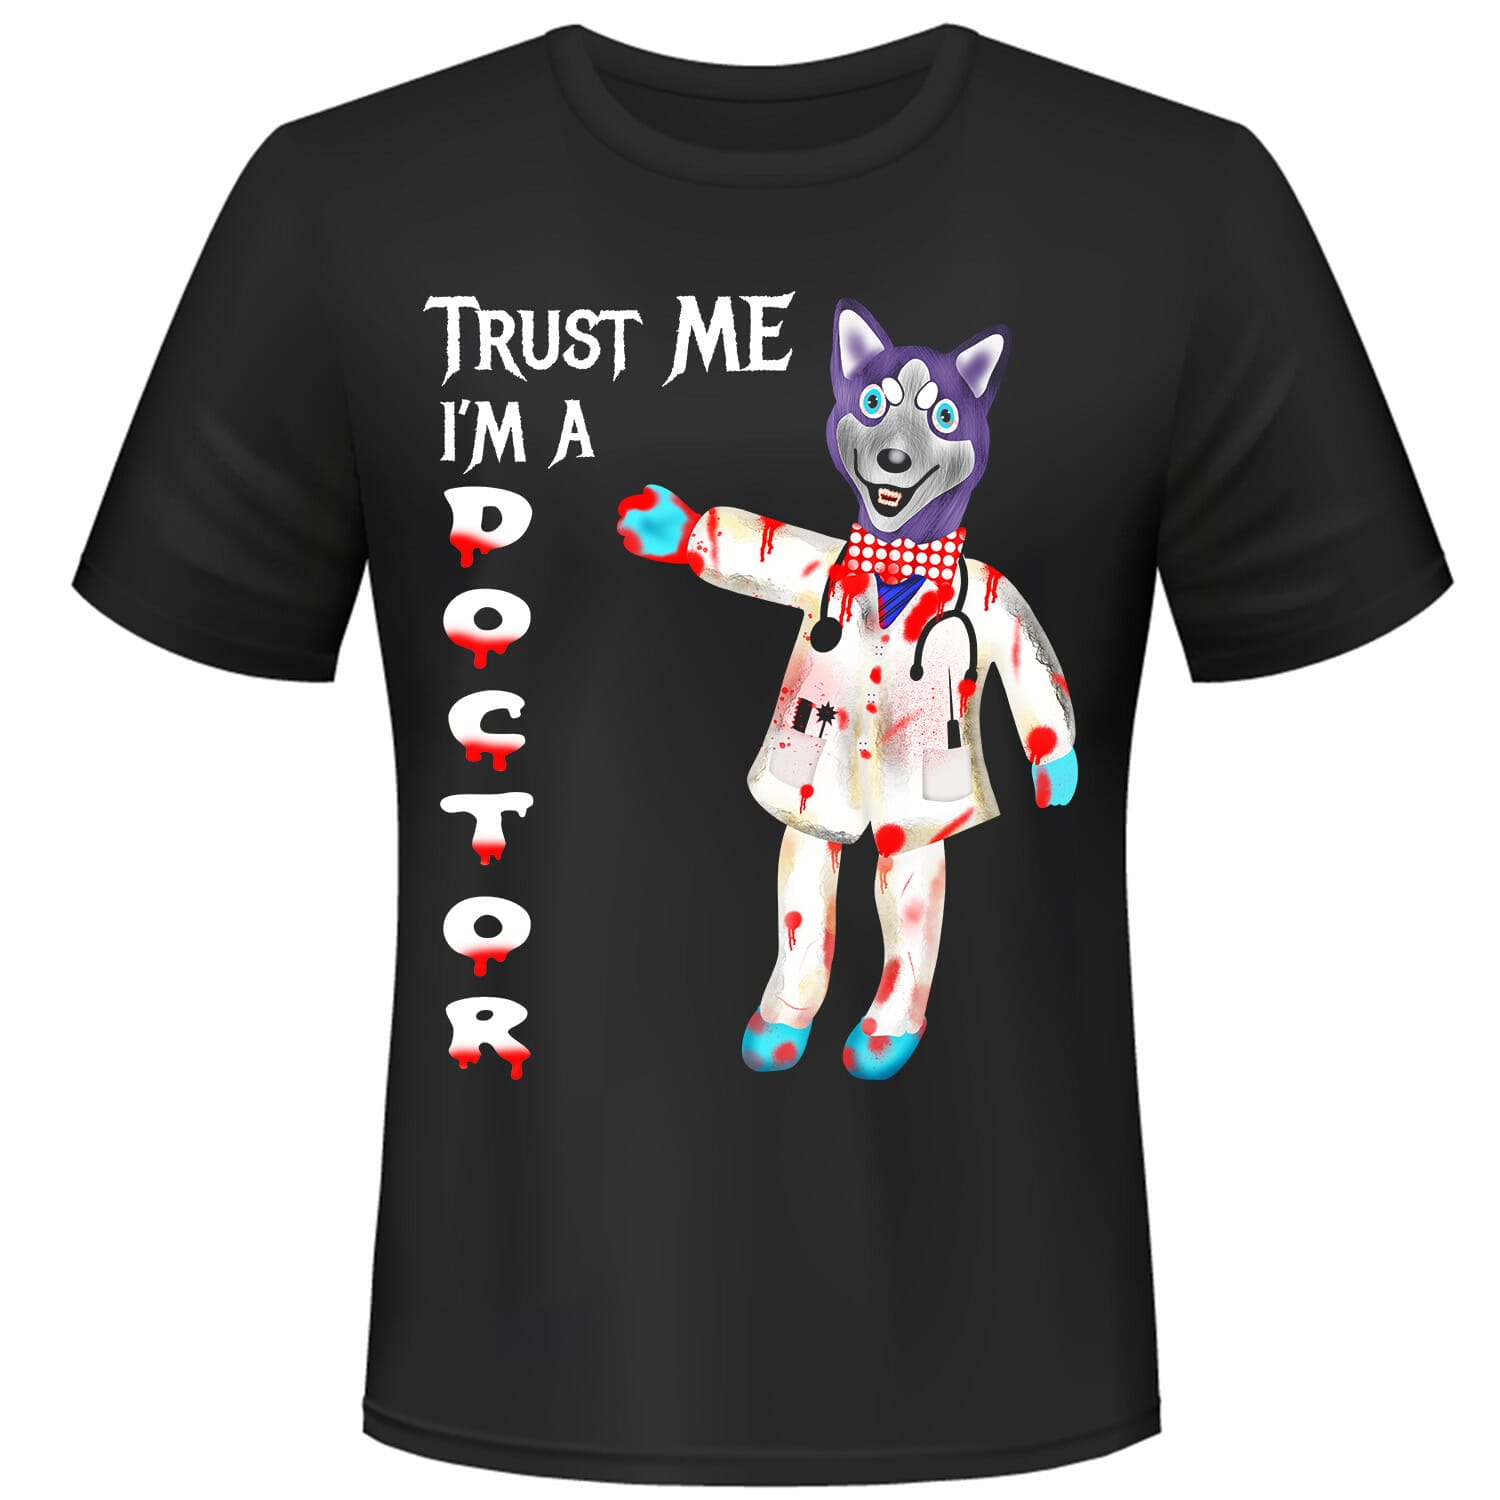 trust me im a doctor tshirt design